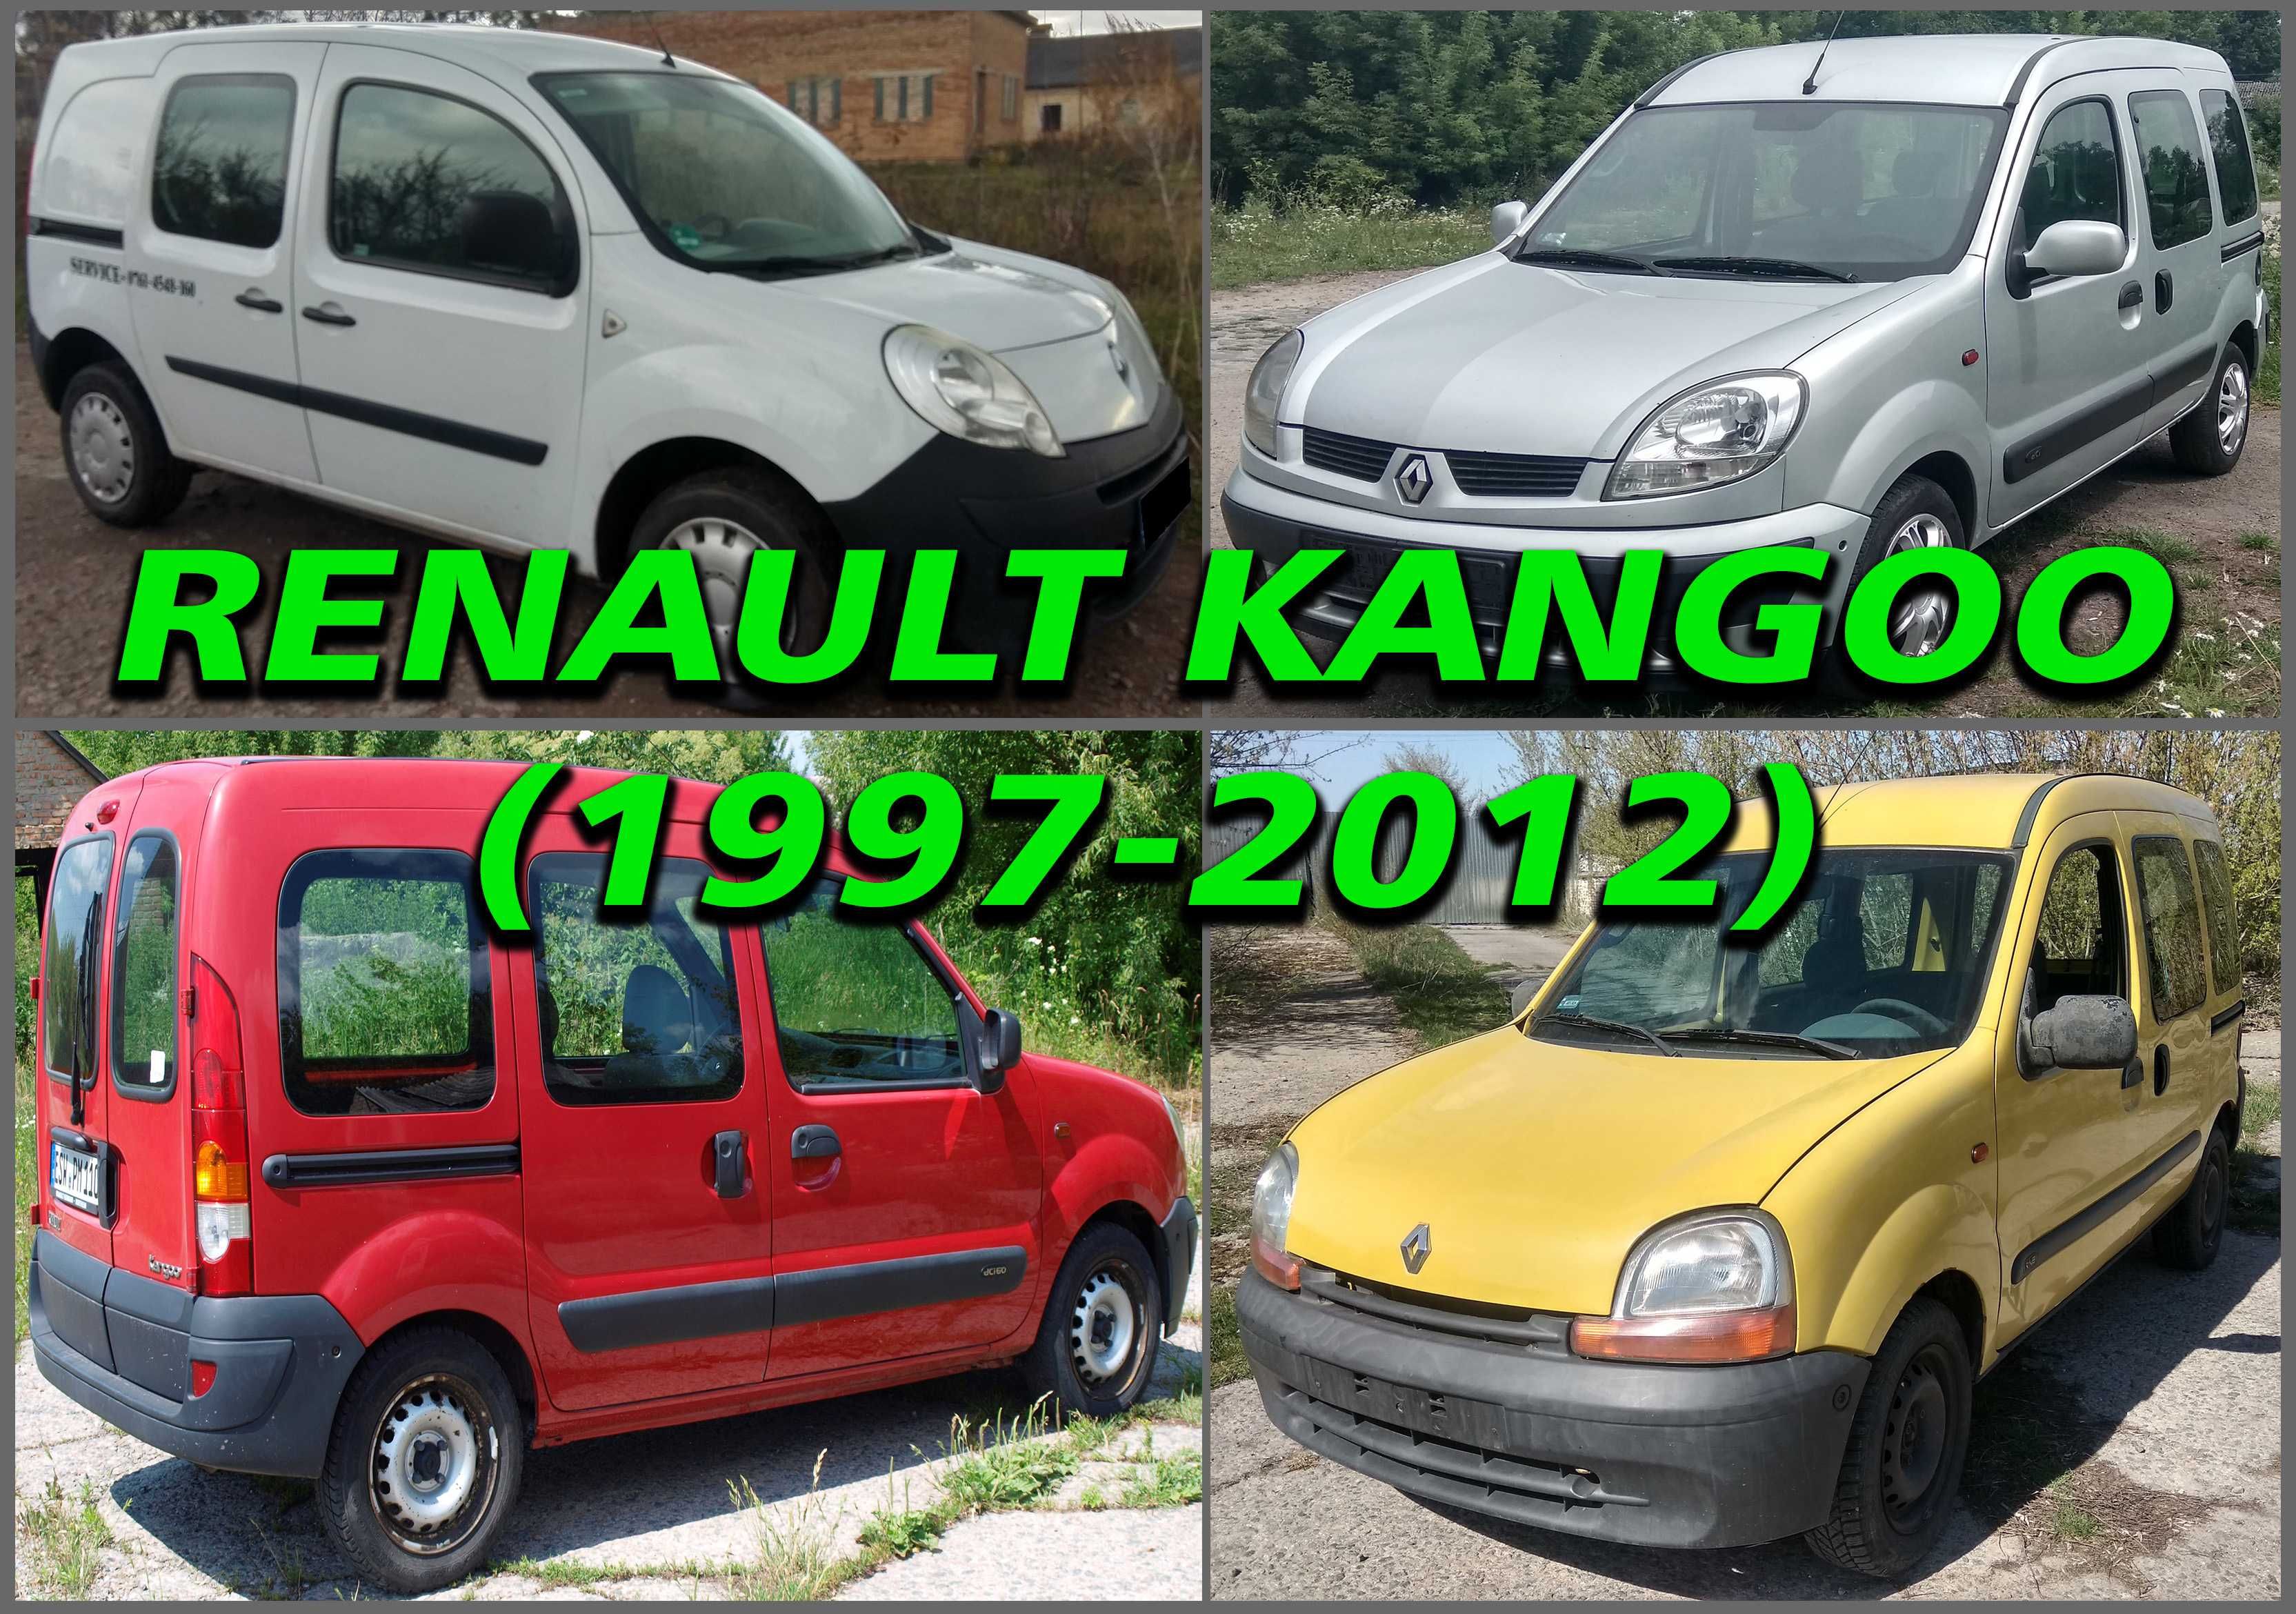 Капот Морда Петля Упор Рено Кенго Кангу Renault Kangoo 97-12